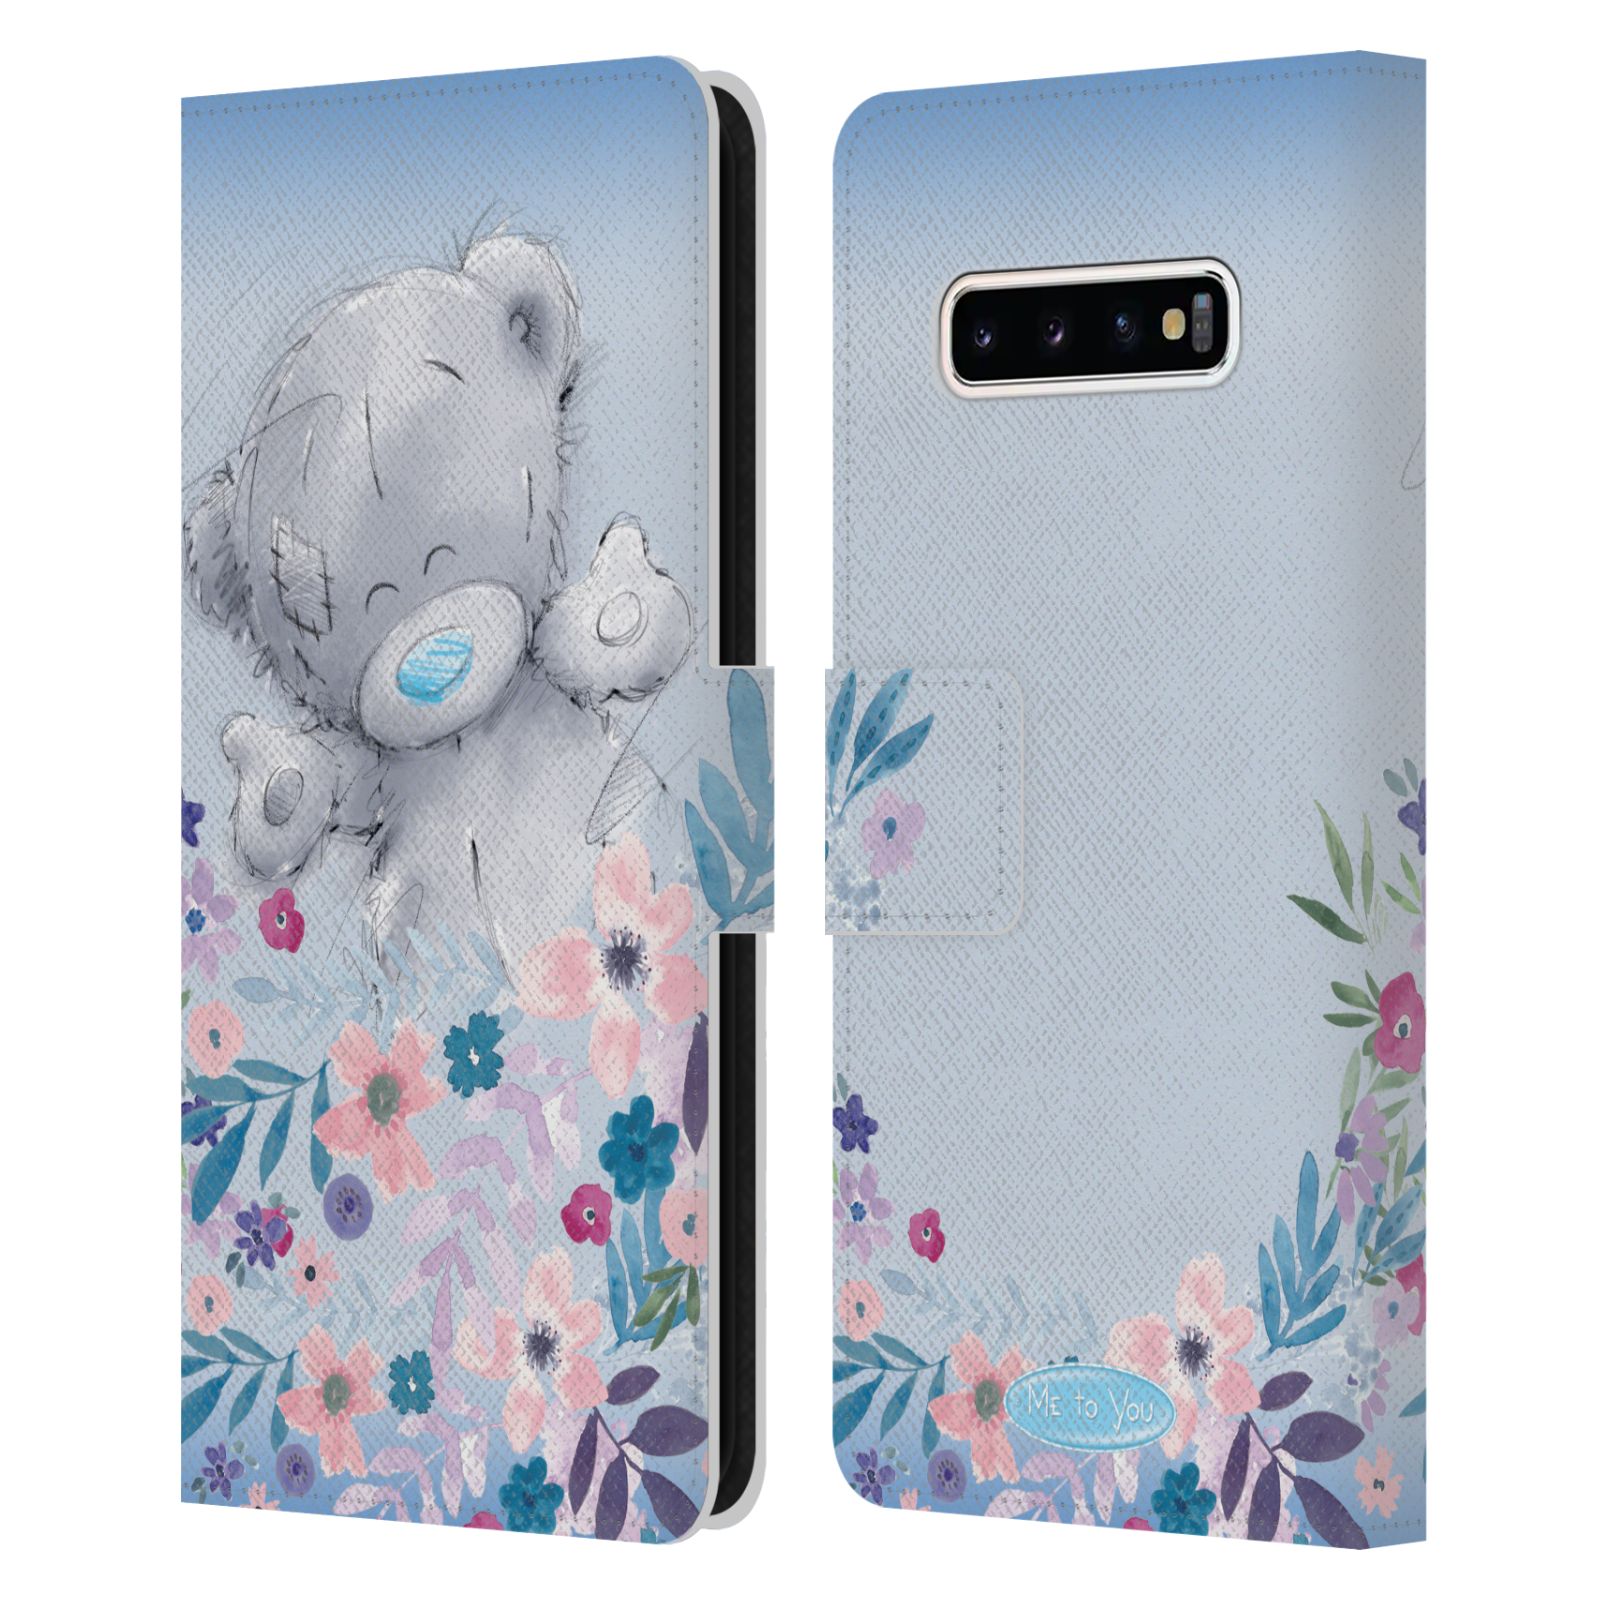 Pouzdro na mobil Samsung Galaxy S10+ - HEAD CASE - Me To You - Medvídek mezi květinami